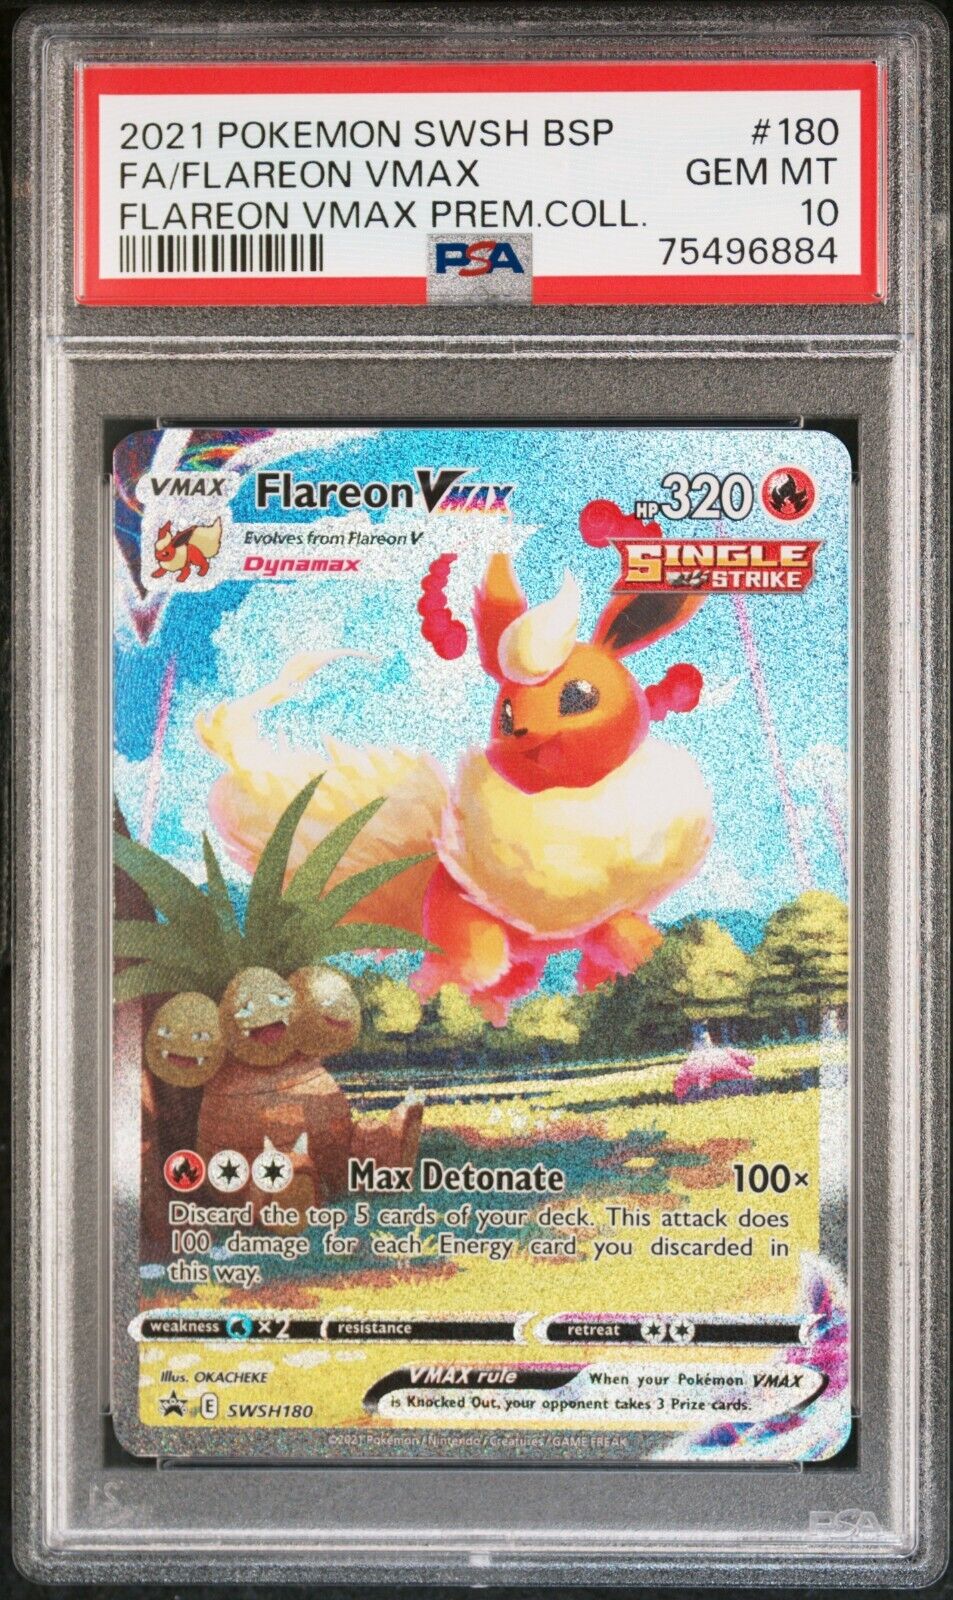 Pokemon Flareon Vmax SWSH180 Alt Art Promo Graded PSA 10